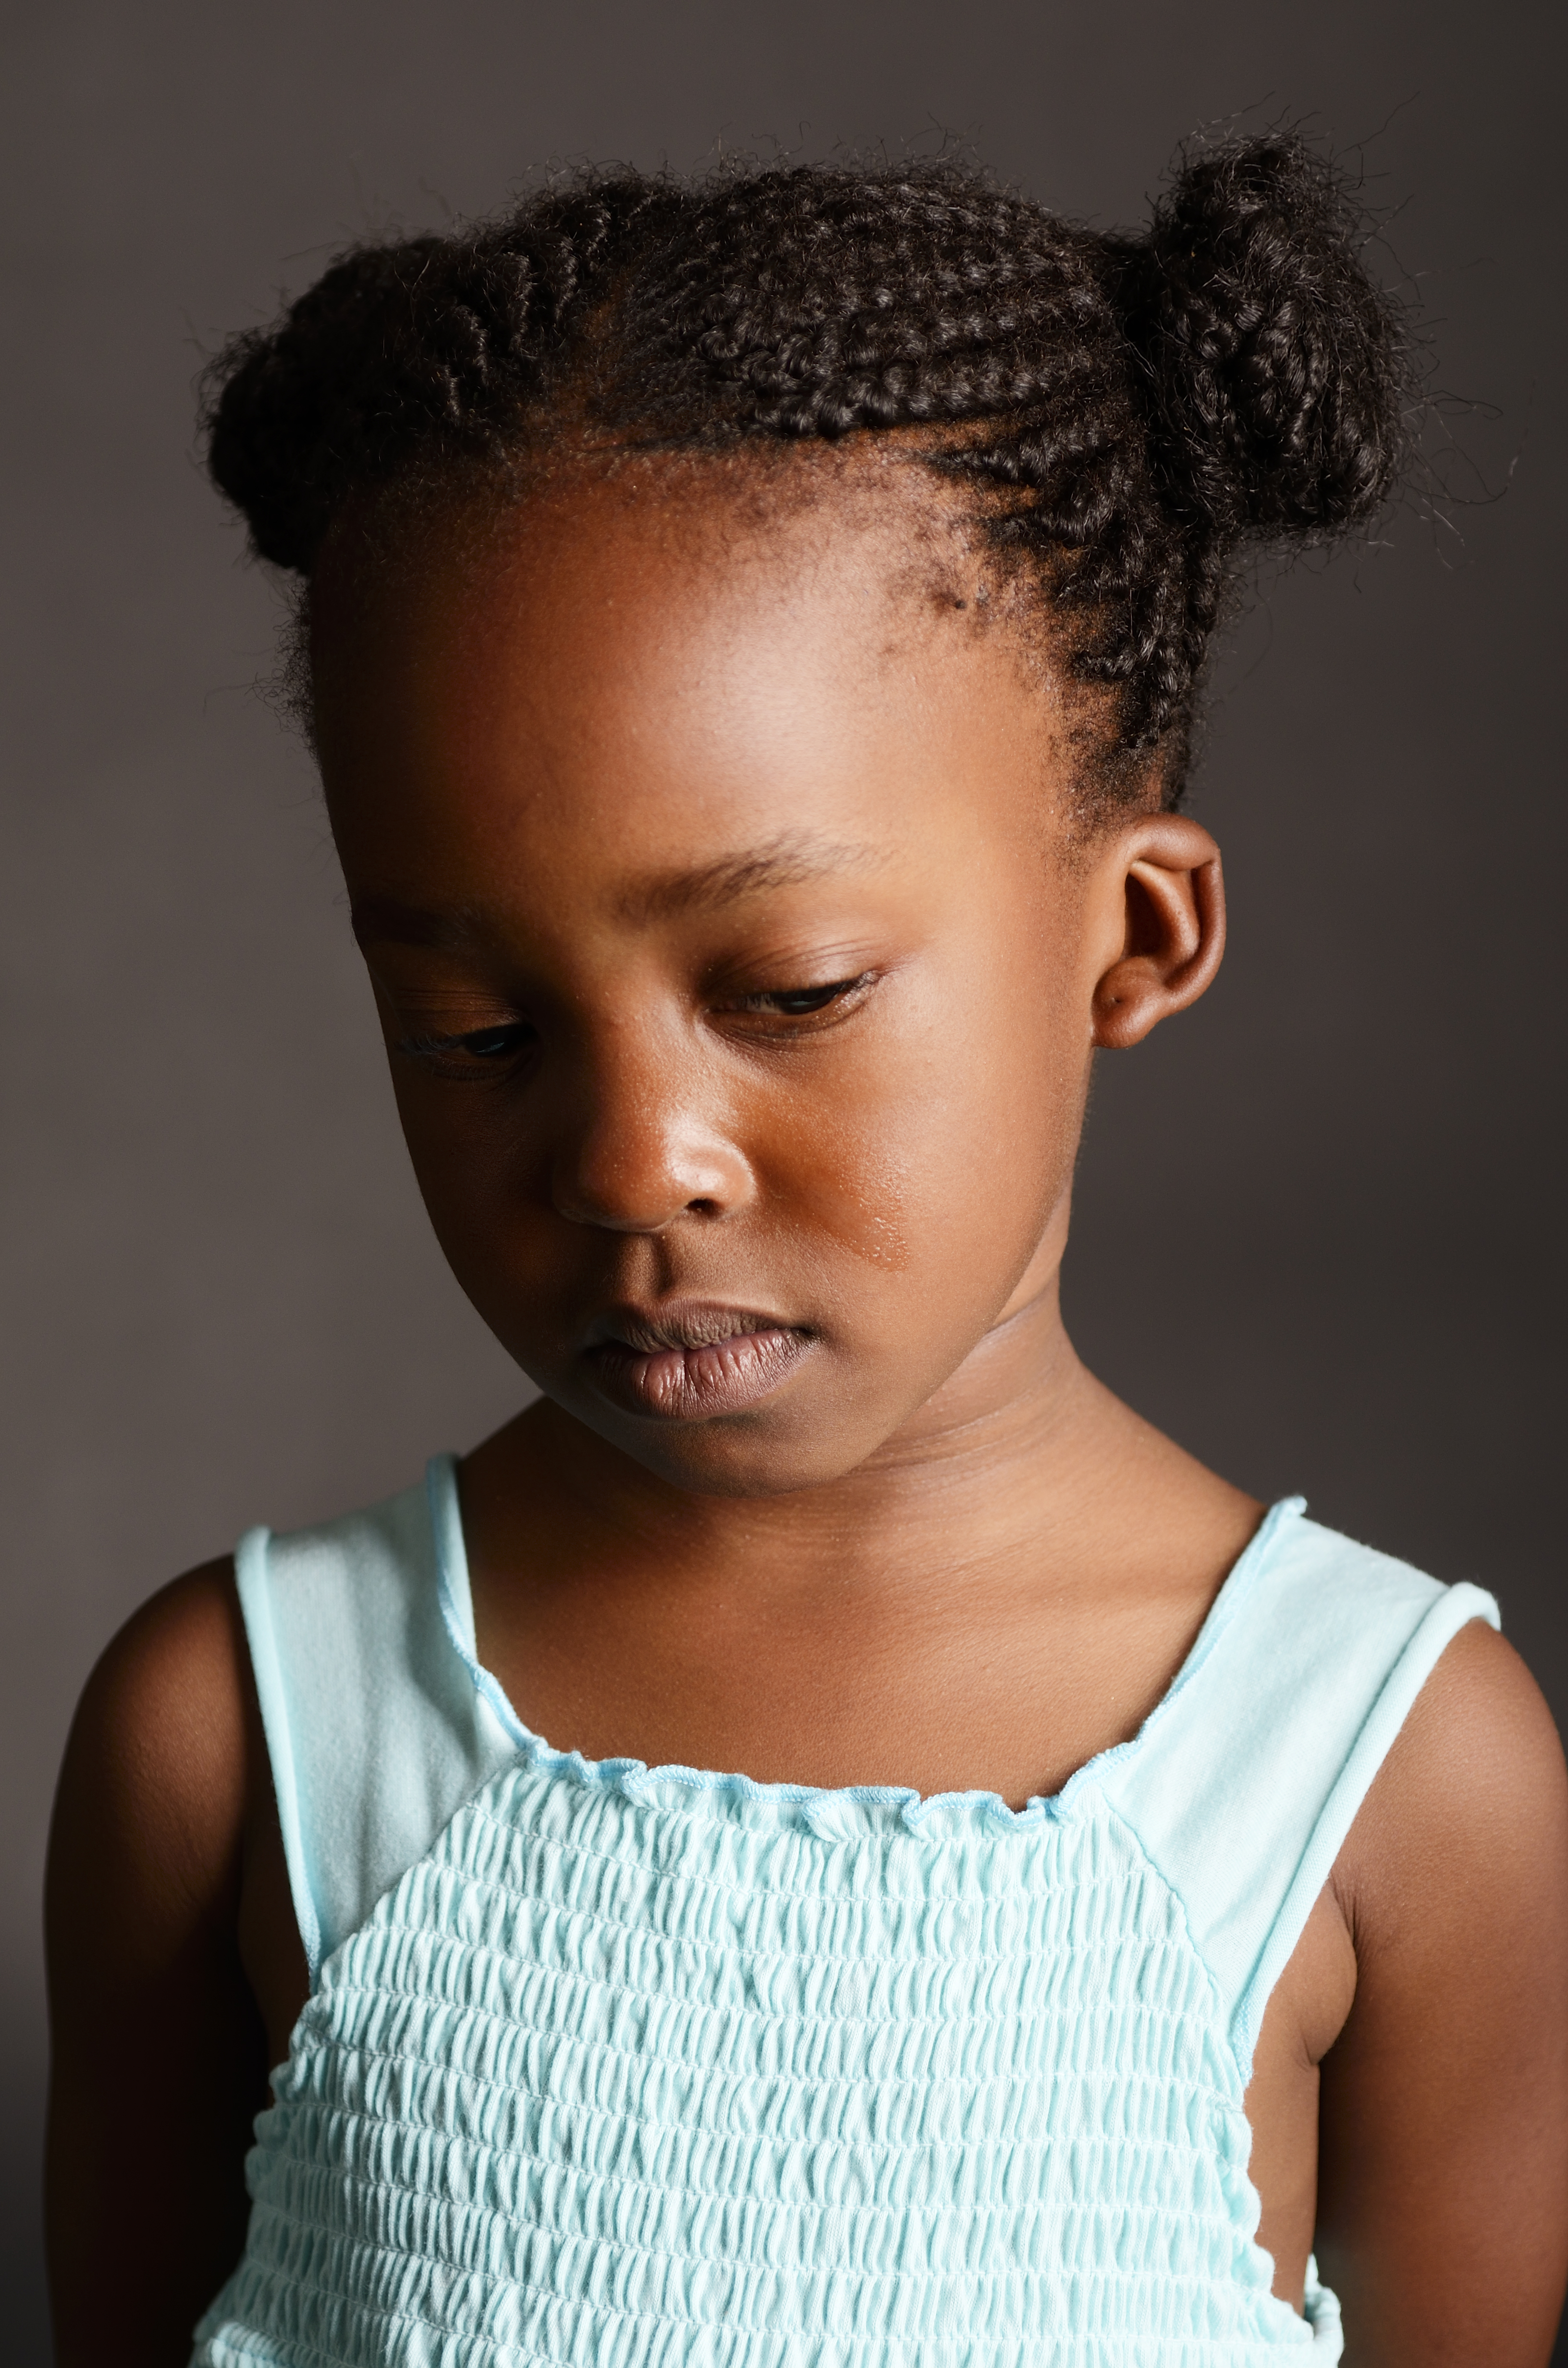 Sad African little girl | Source: Shutterstock